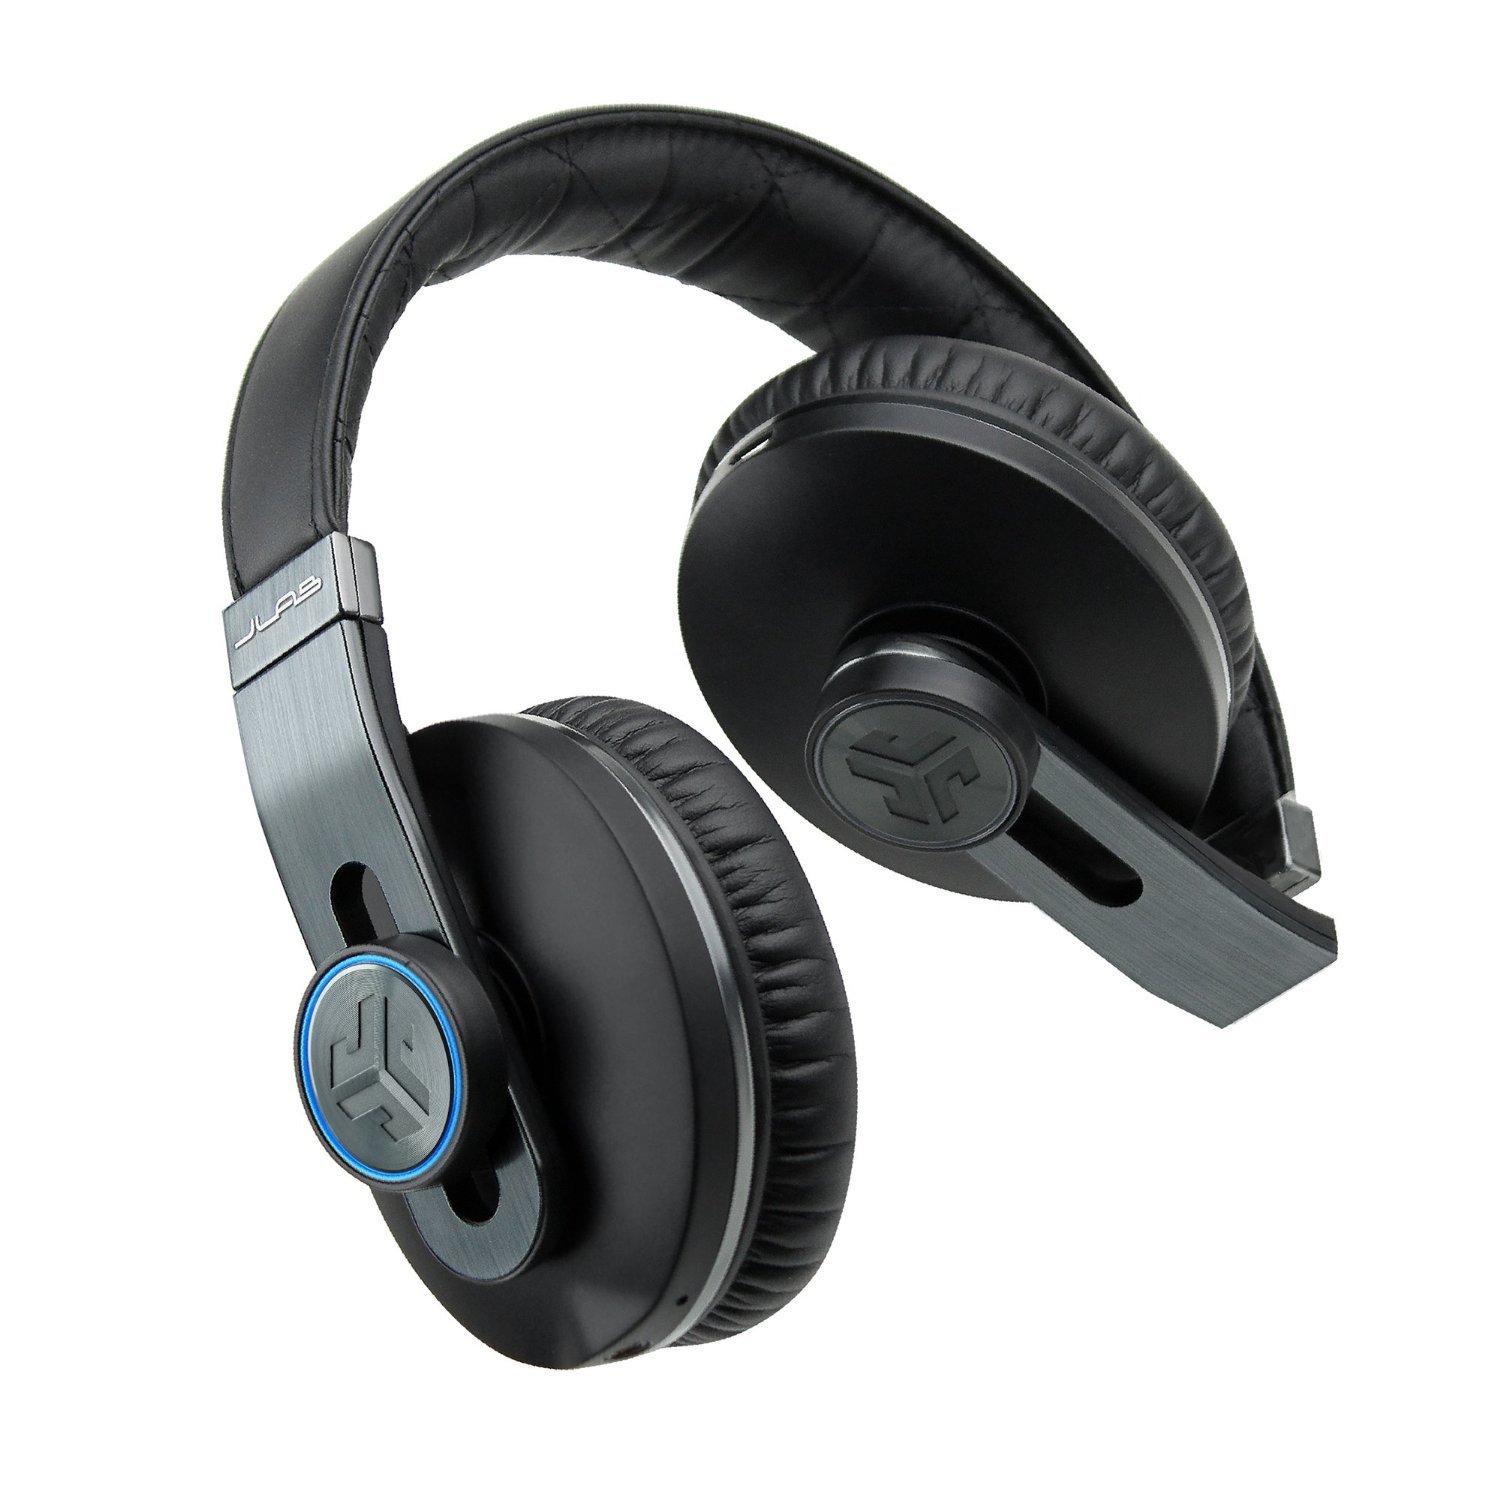 JLab Audio OMNI Premium Over-Ear Bluetooth Headphones with Mic - Black - image 3 of 7